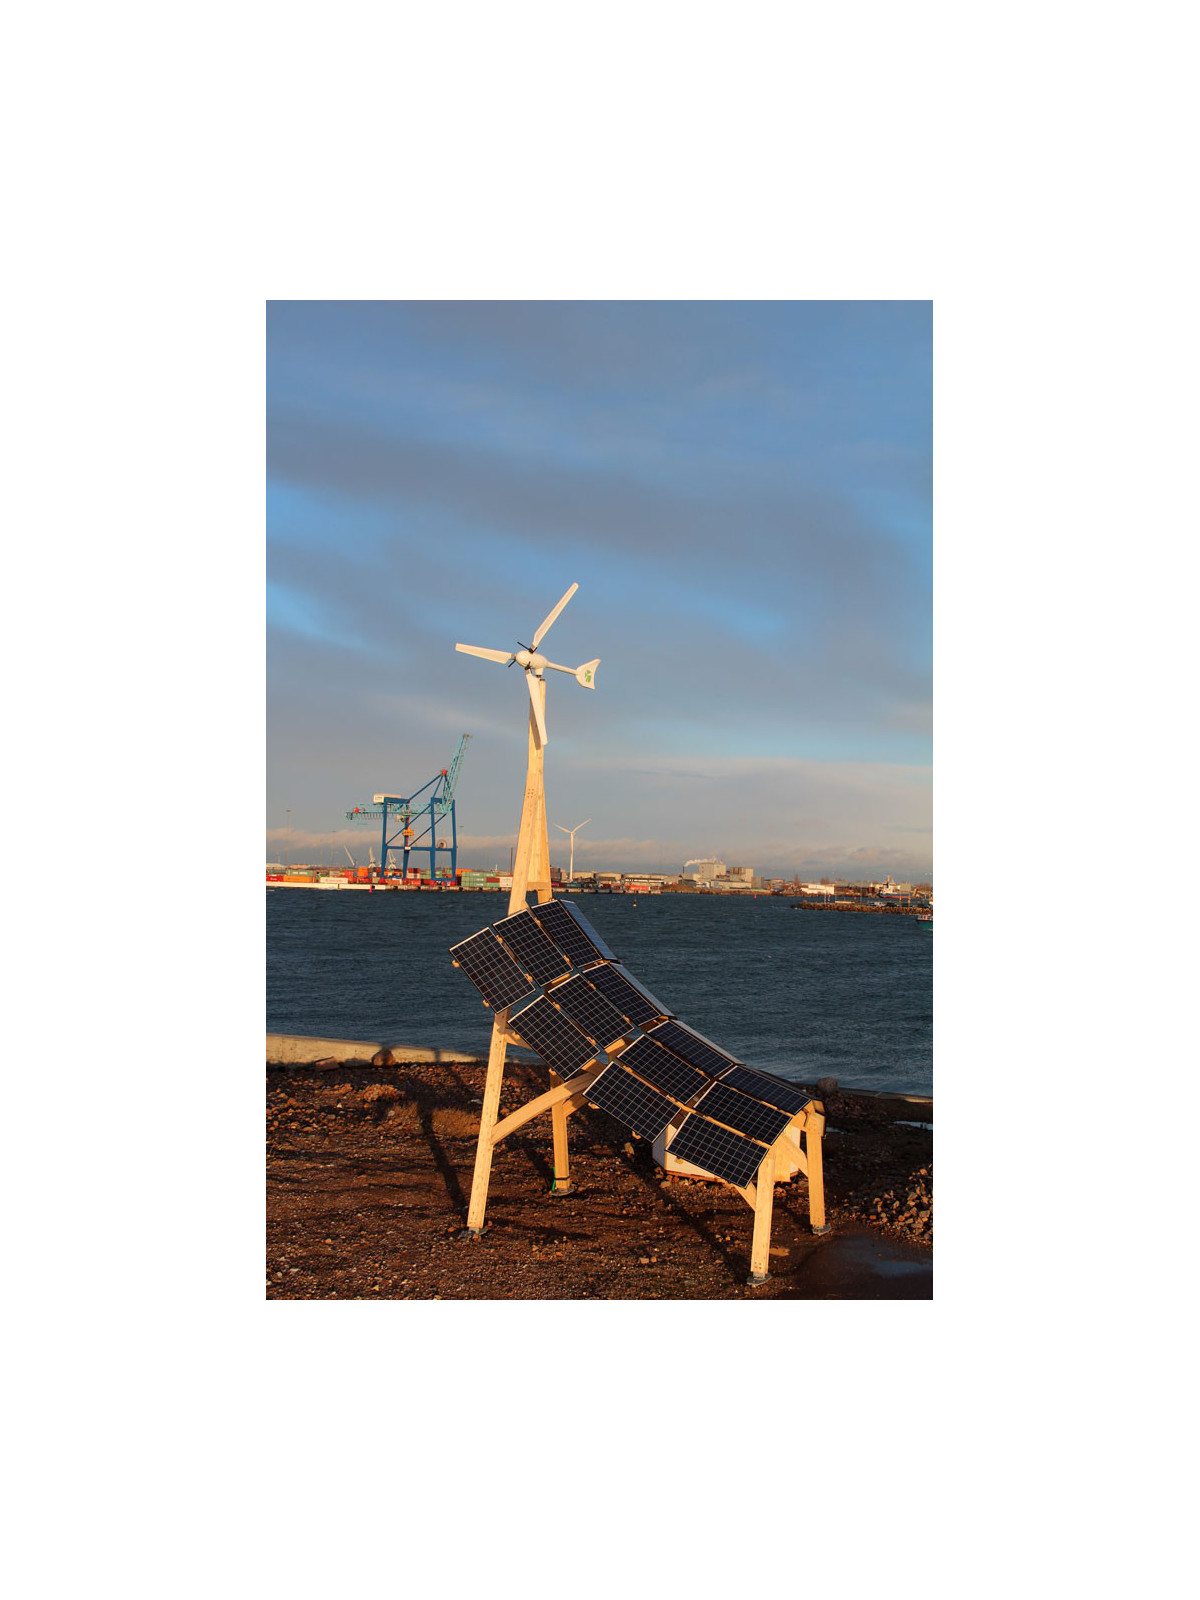 Girafe 2.0 centrale éolienne et solaire hybride InnoVentum